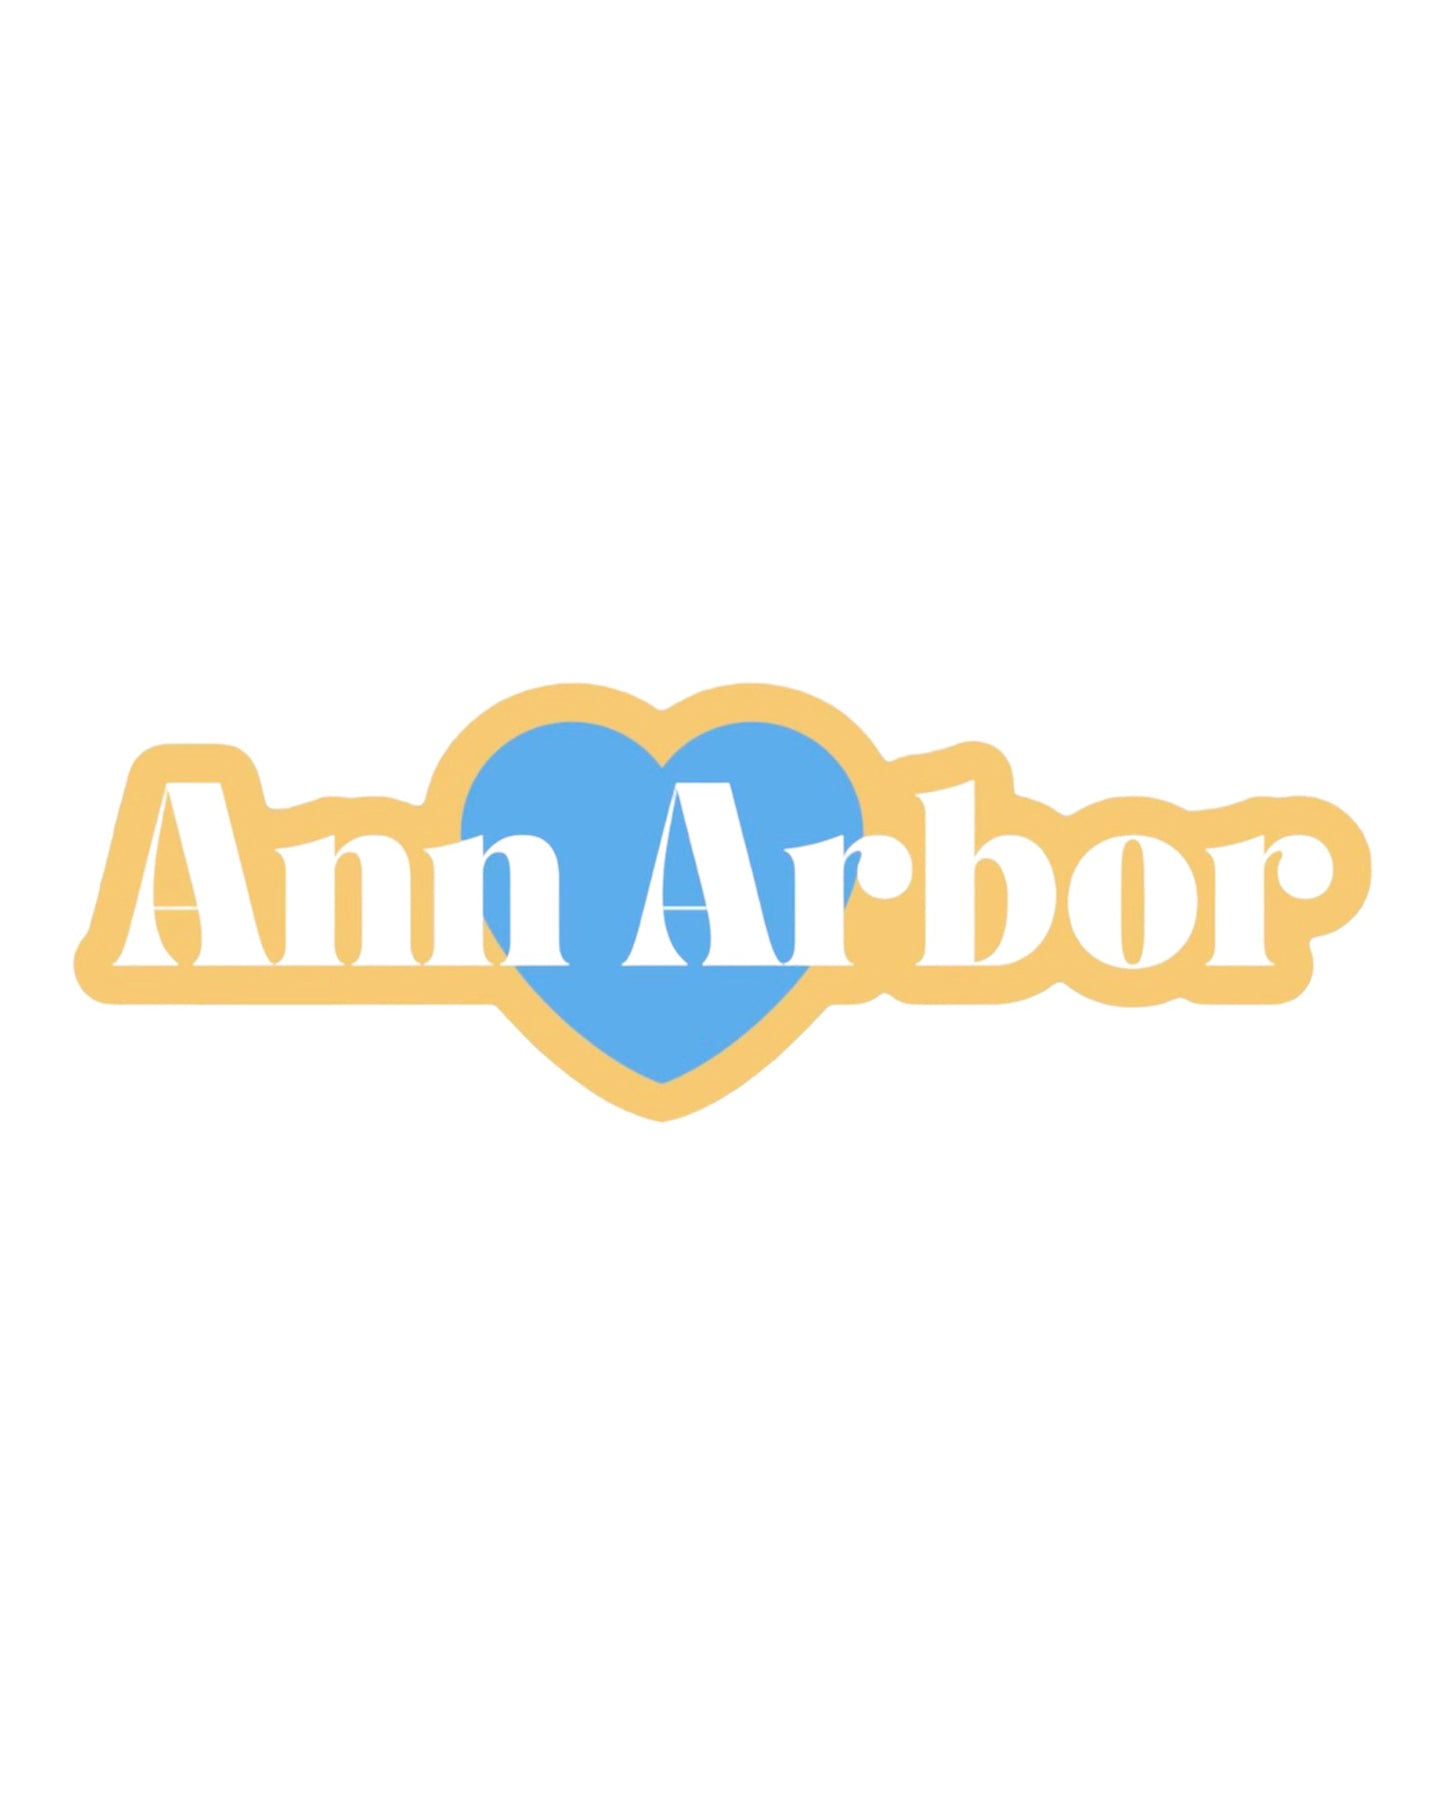 Ann Arbor Heart Sticker